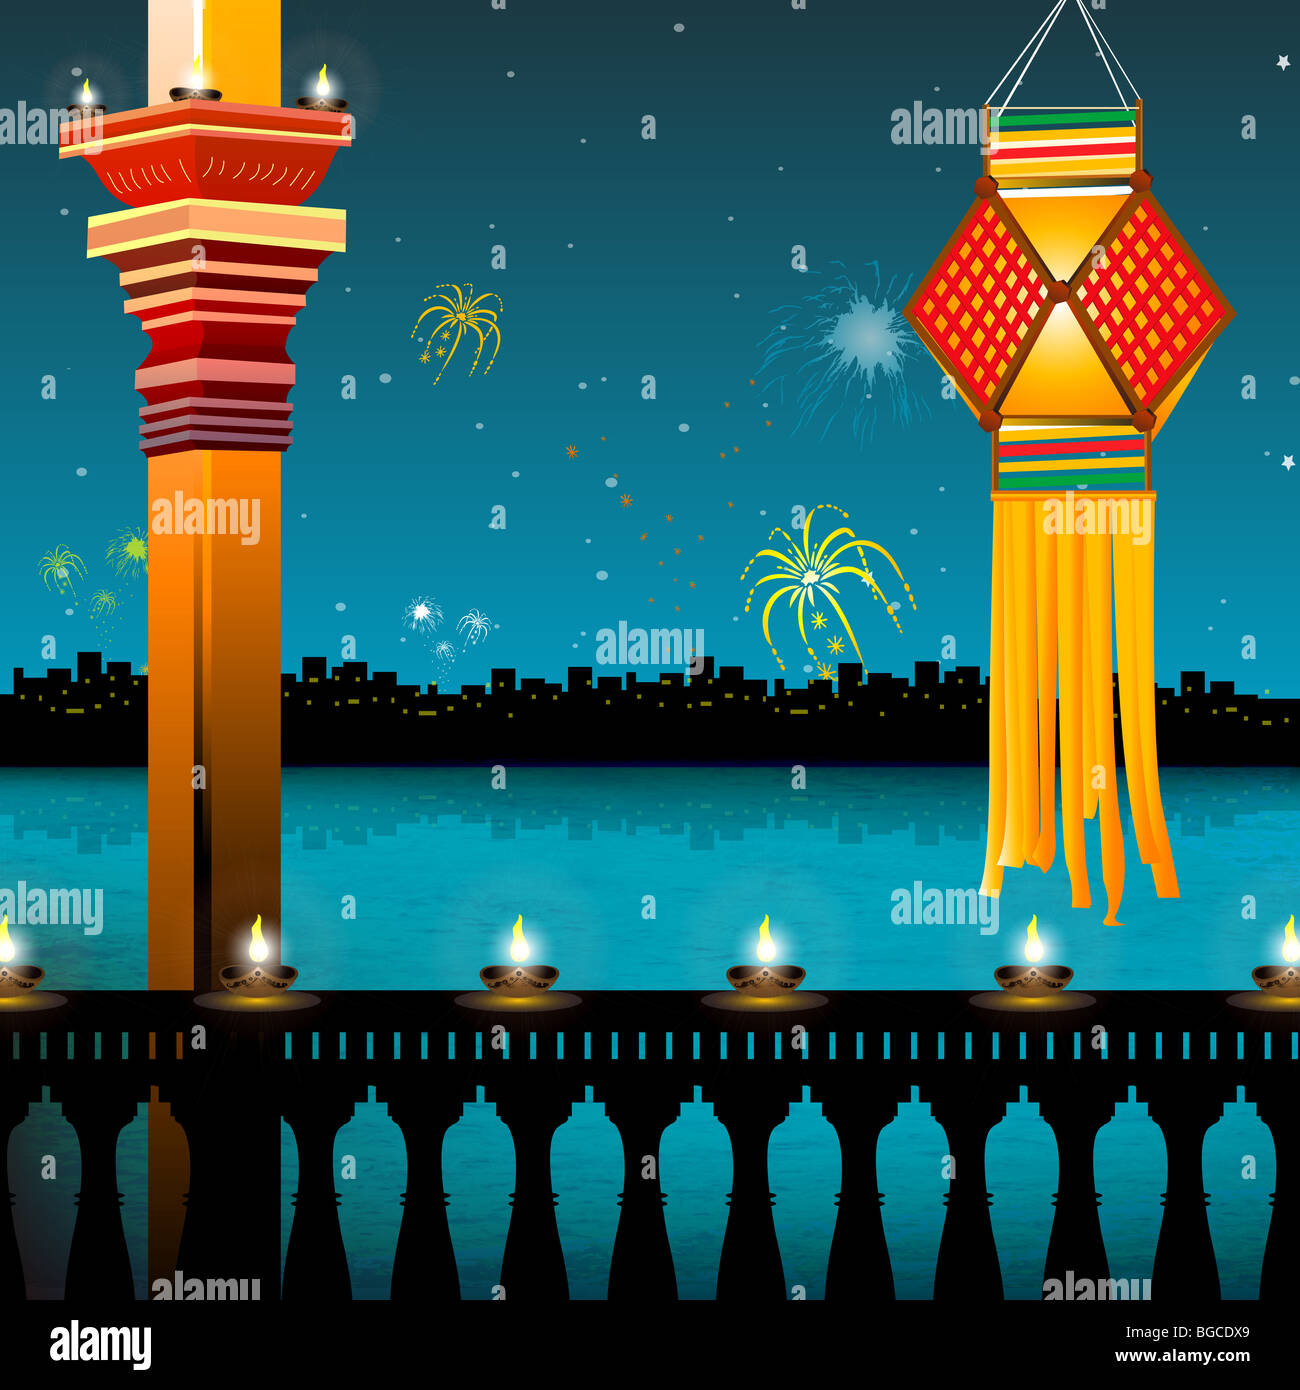 lamp lighting, lanterns, fireworks, balcony,festival - diwali Stock Photo